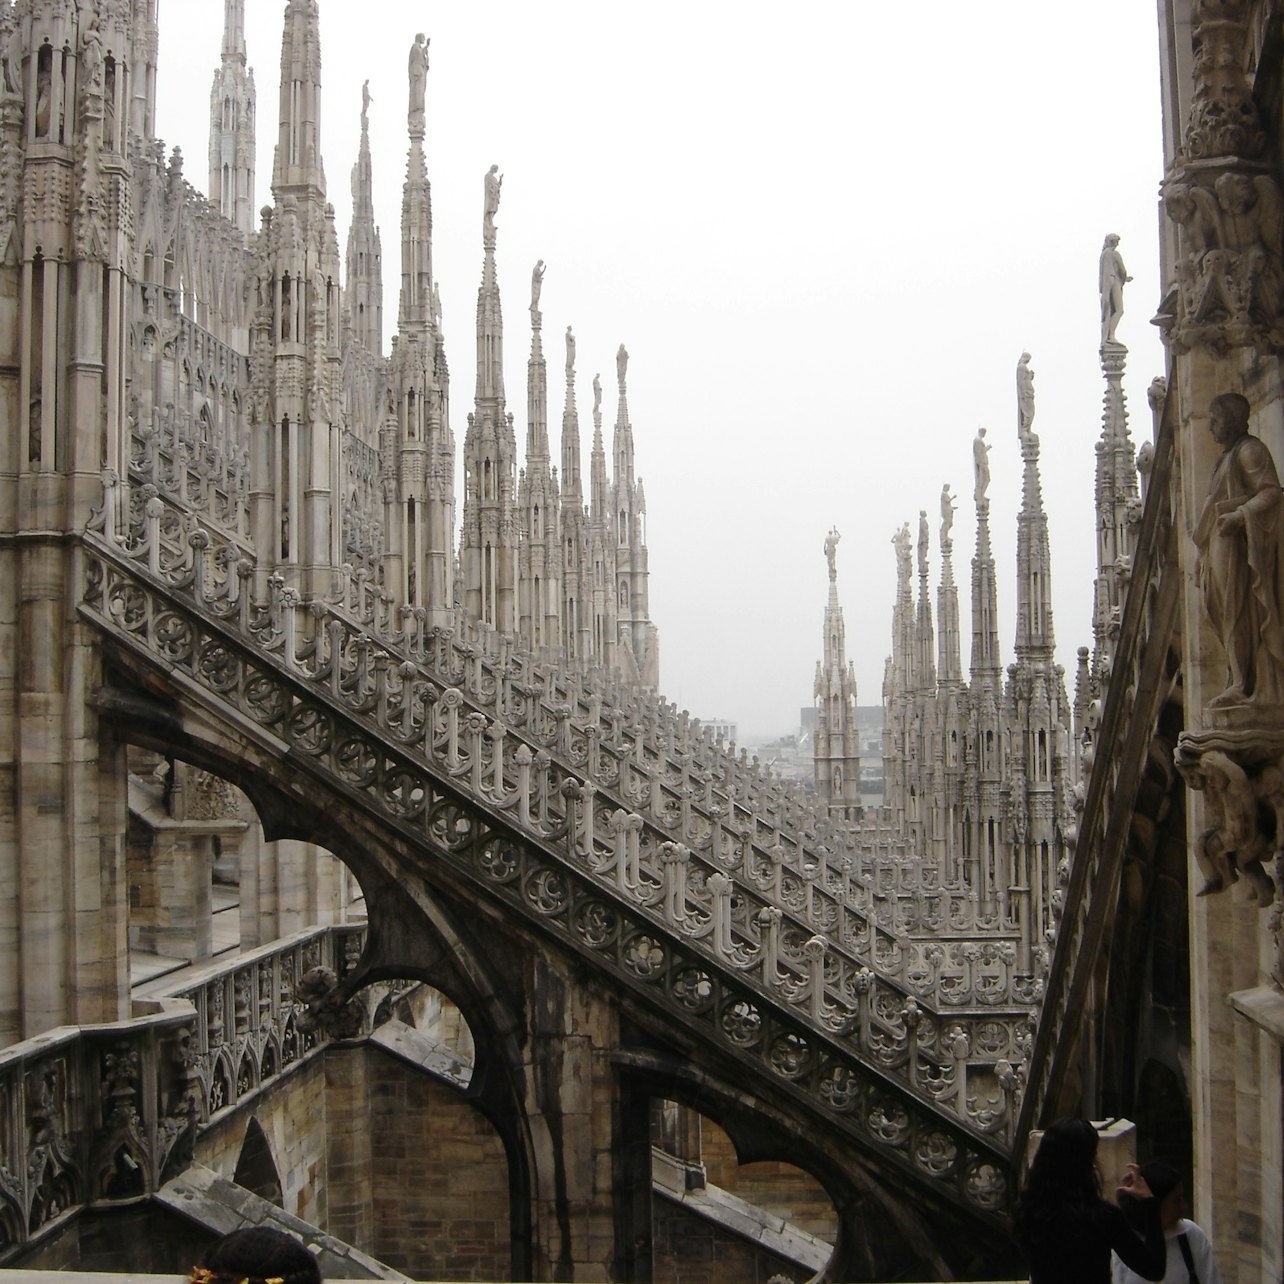 Duomo di Milano, Rooftops & Museum: Entry Ticket